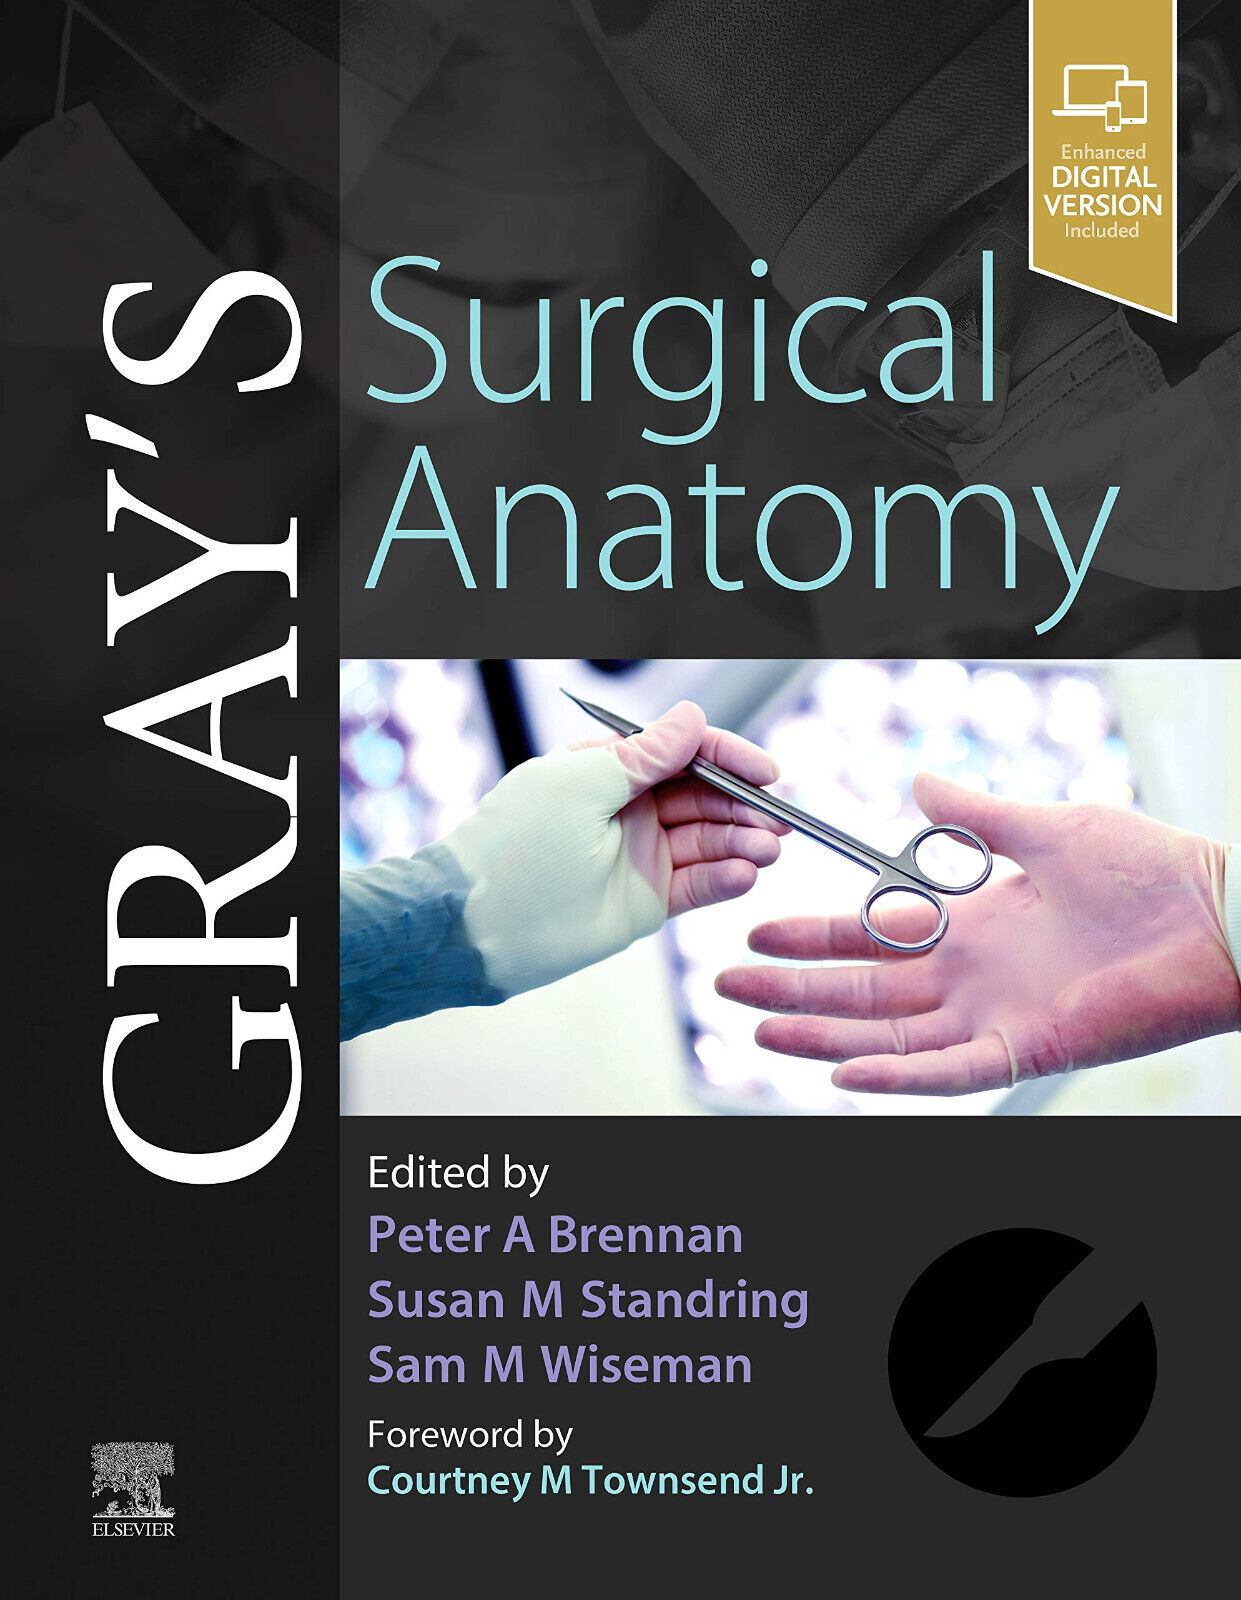 Gray's Surgical Anatomy -  Peter Brennan, Susan Standring, Sam Wiseman - 2019